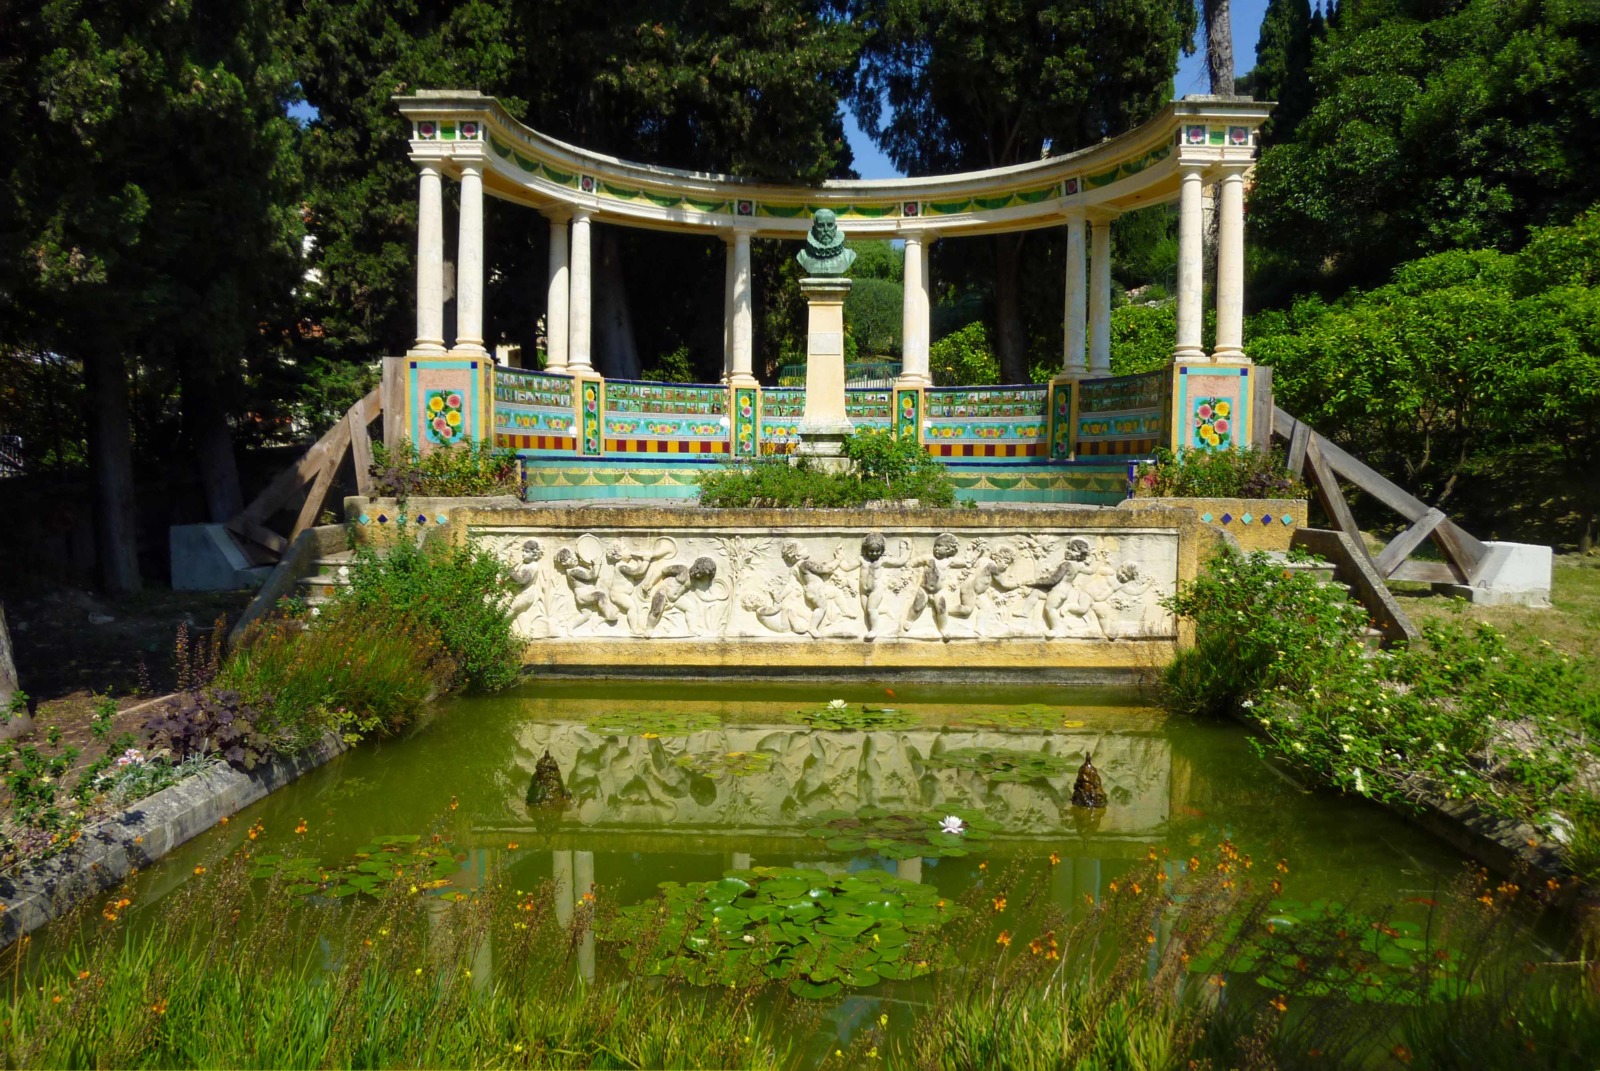 The gardens of Fontana Rosa © Miniwark - licence [CC BY-SA 3.0] from Wikimedia Commons